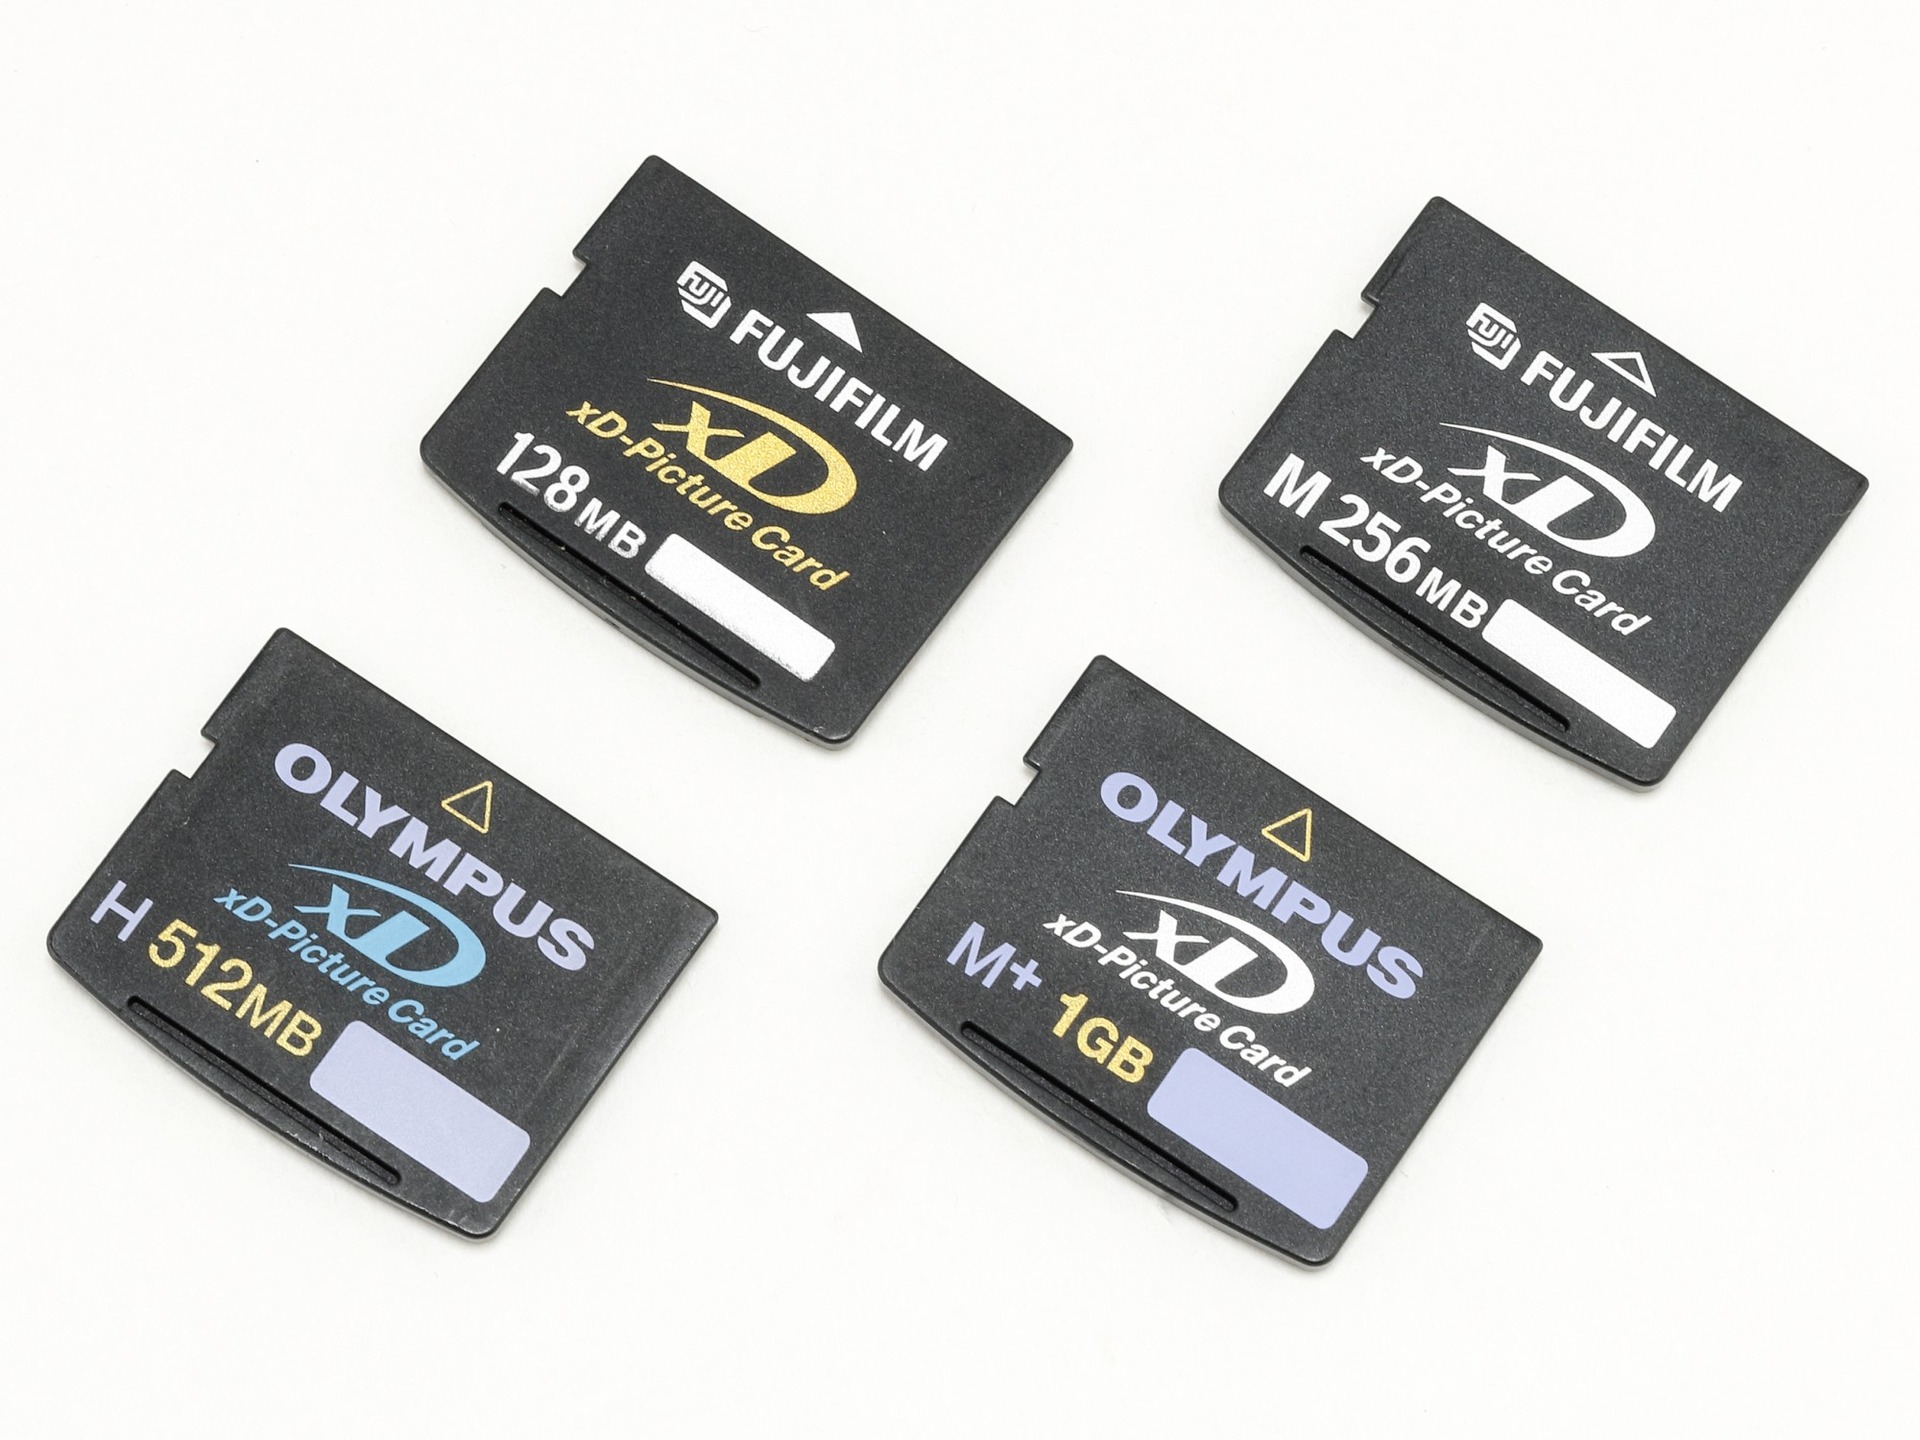 xD-ピクチャーカード3枚（512MB、1GB,2GB)オリンパス-